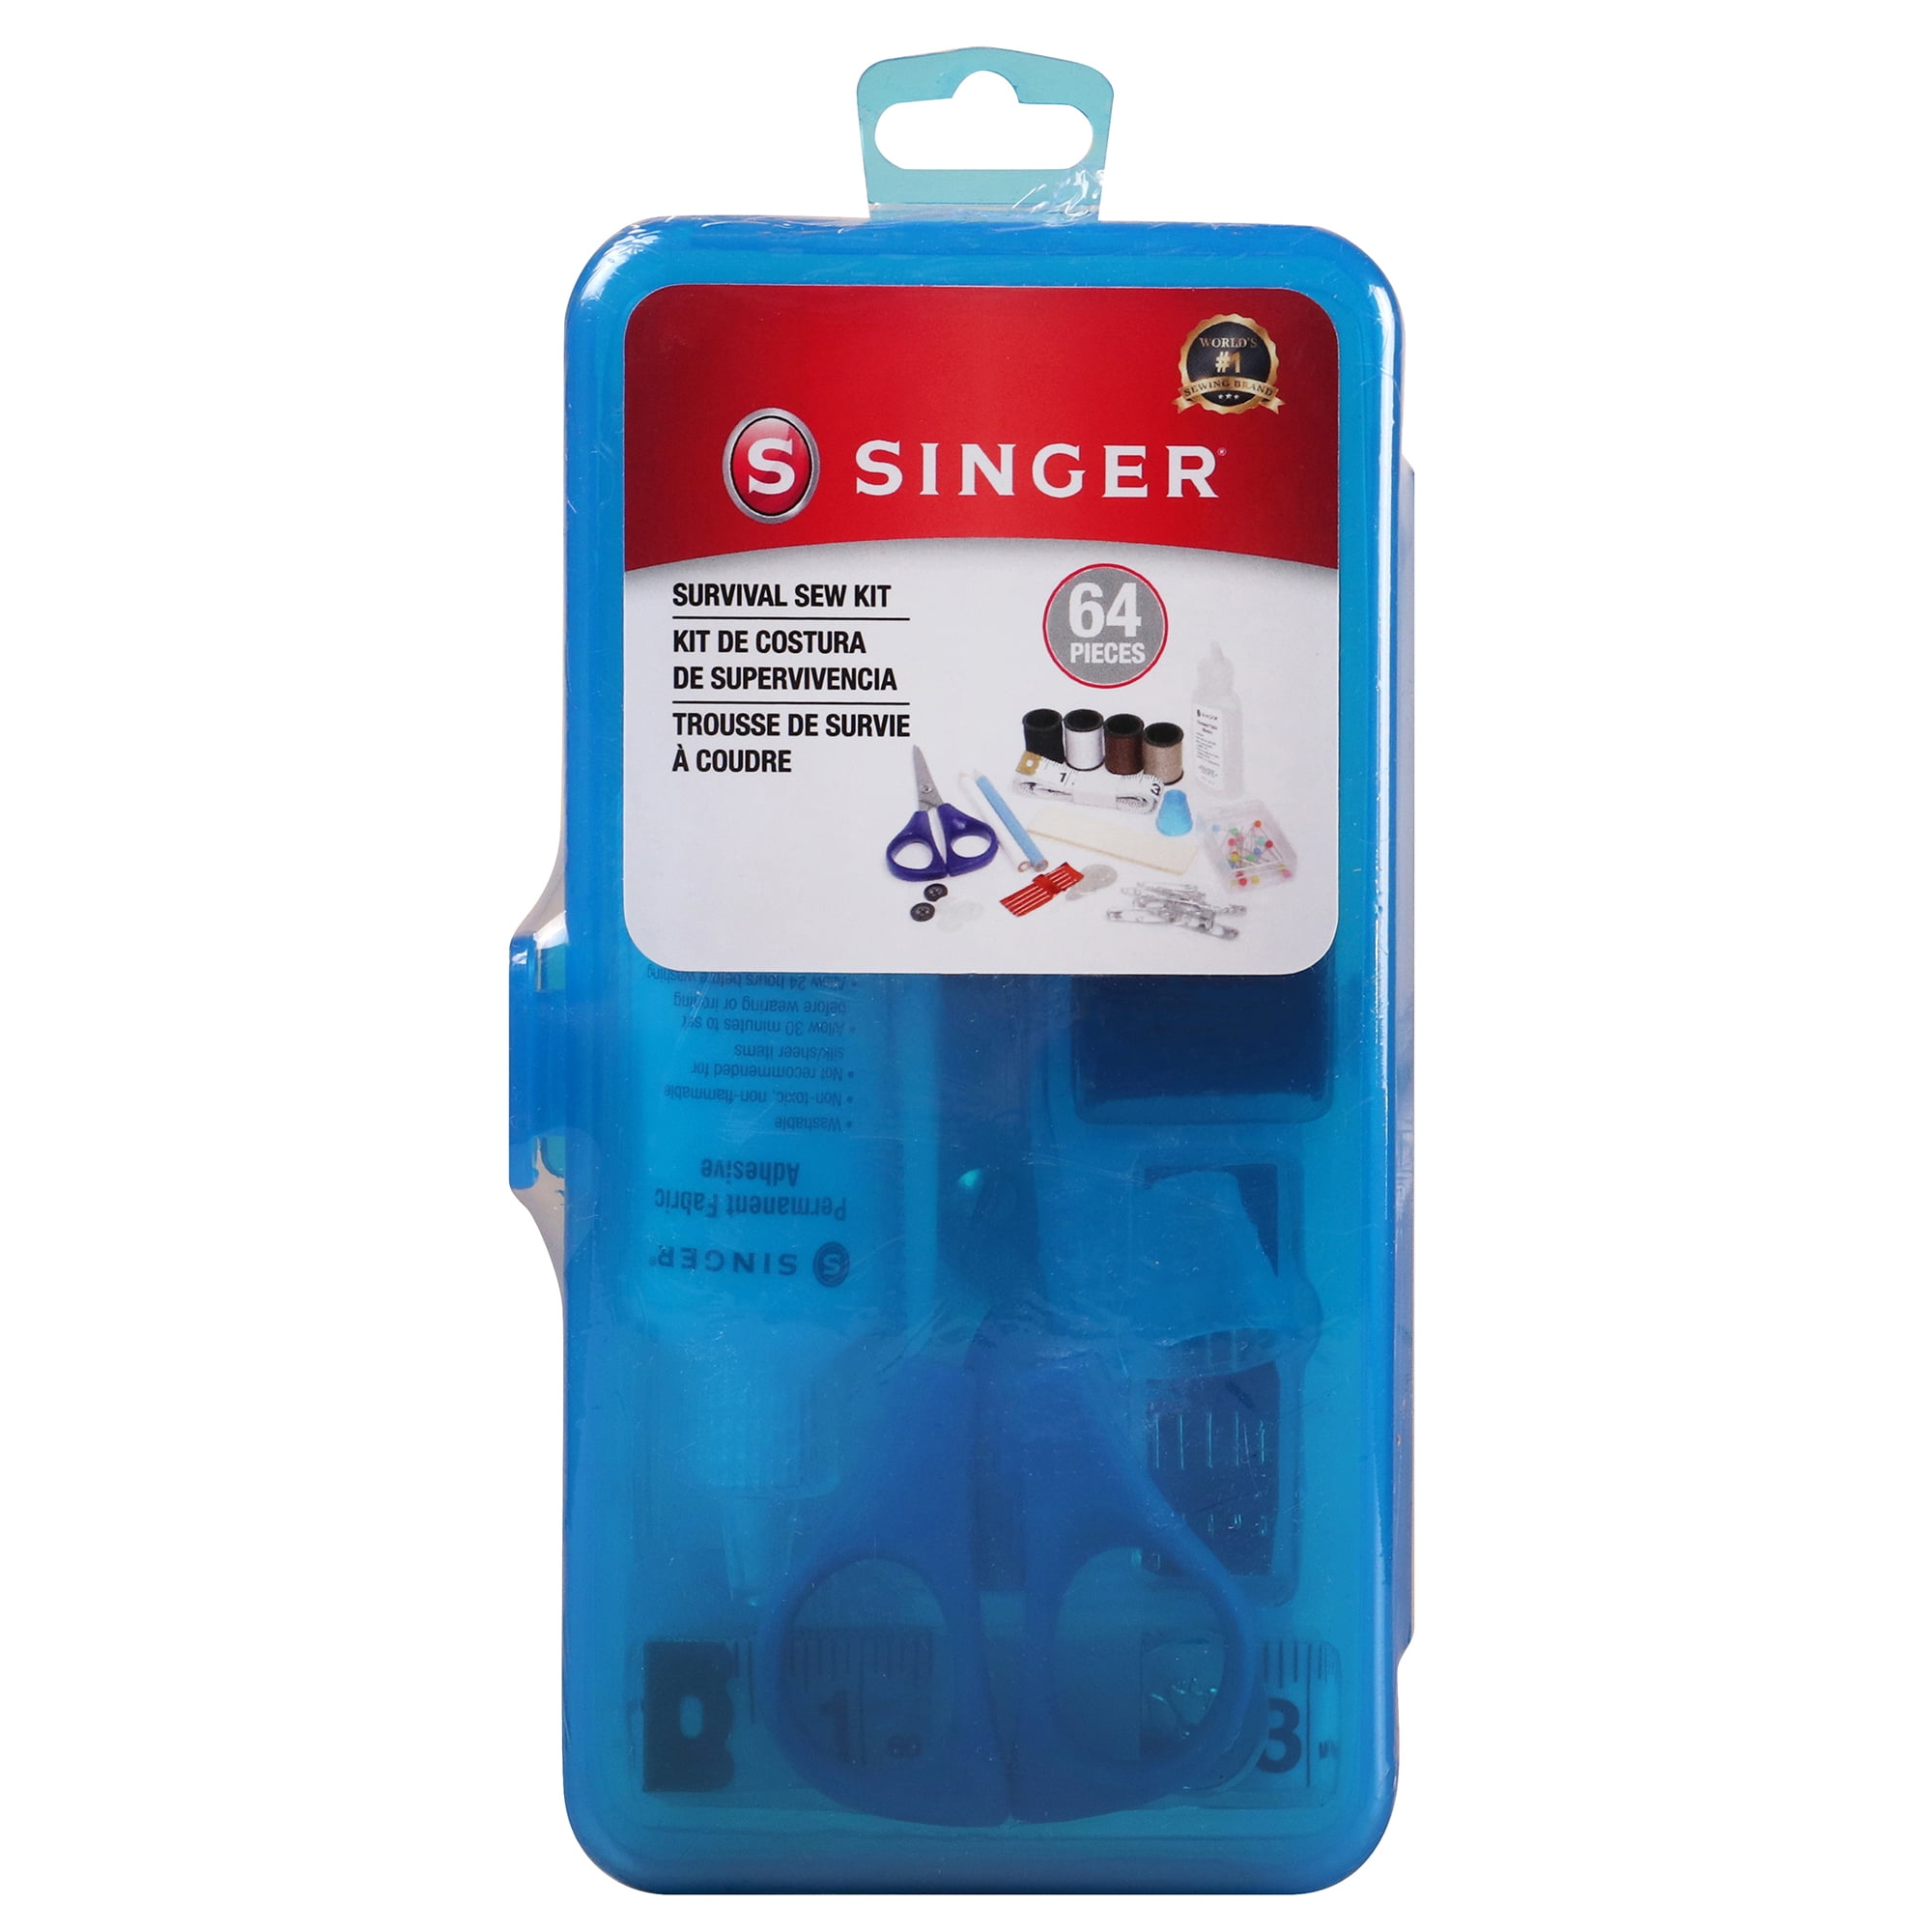 Singer Survival Sewing Kit Ast 64pc